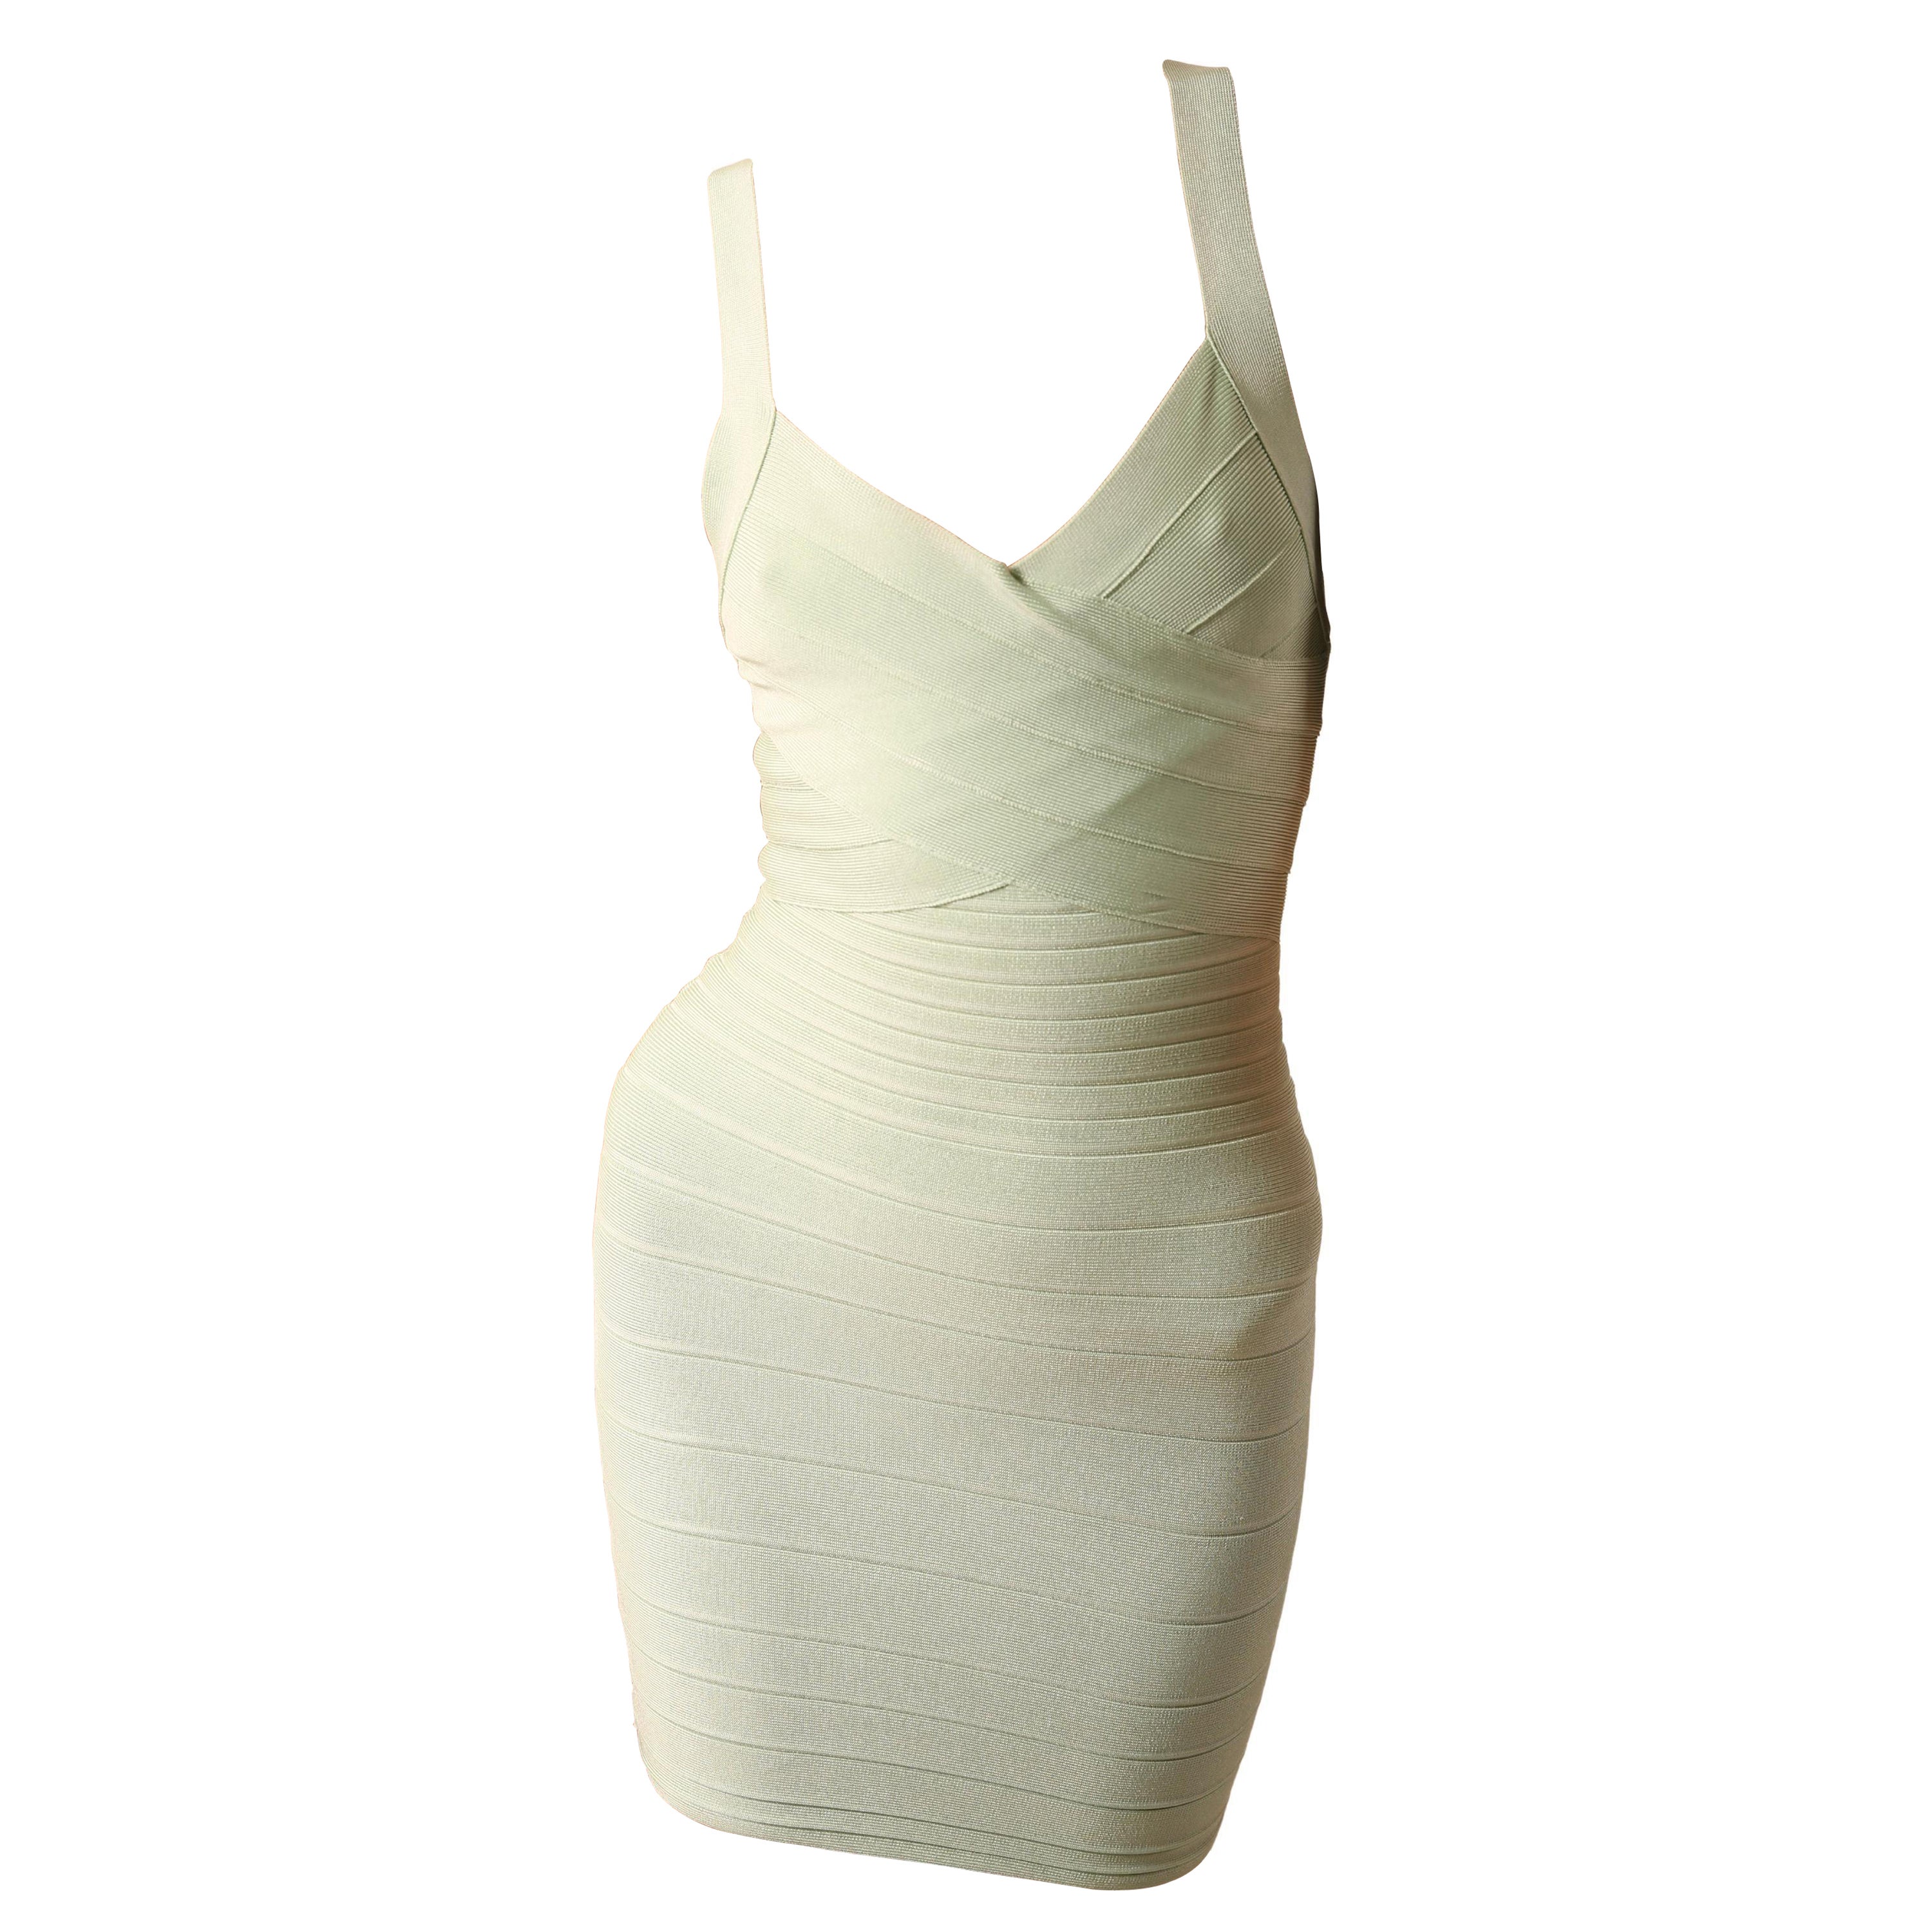 Herve Leger mint green bandage body con low cut cross over backless mini dress